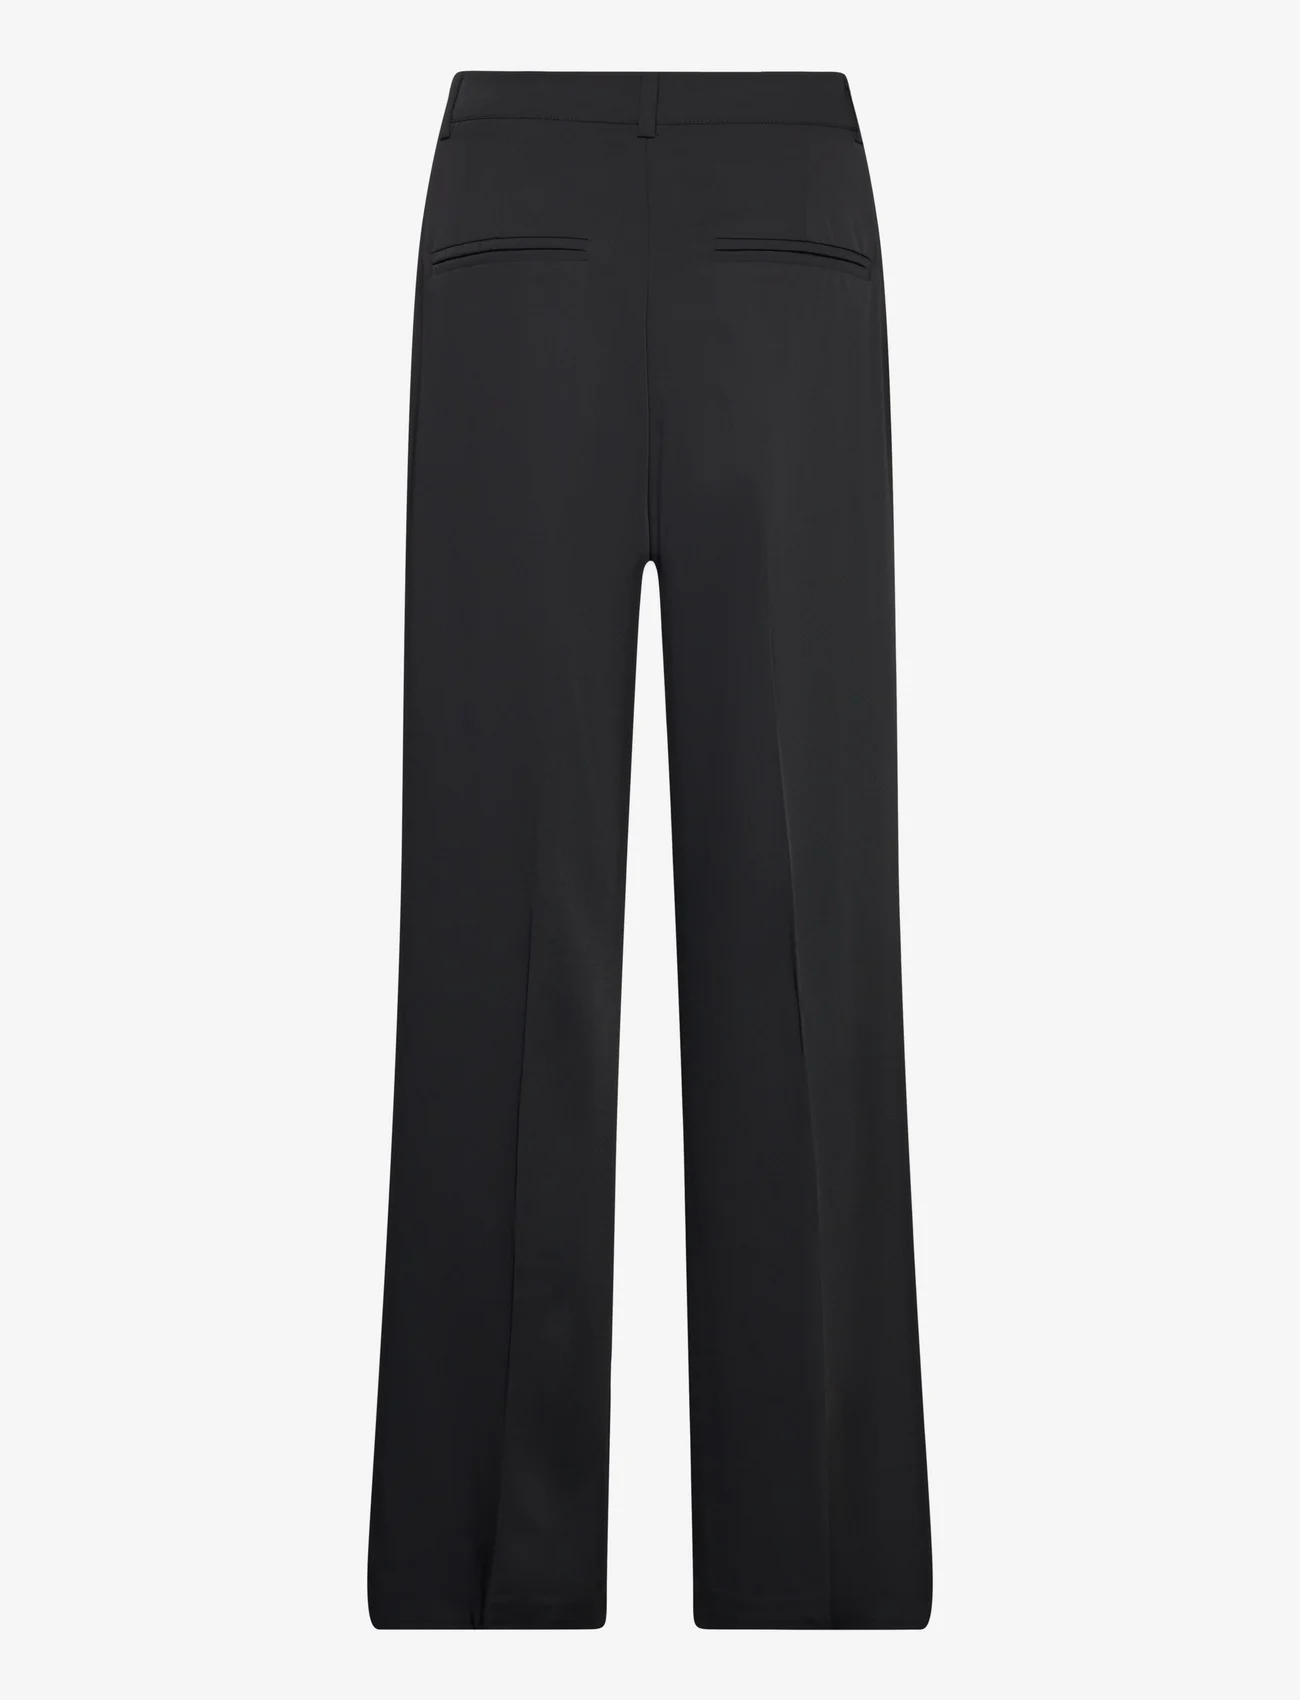 Cras - Nancycras Pants - pidulikud püksid - black - 1